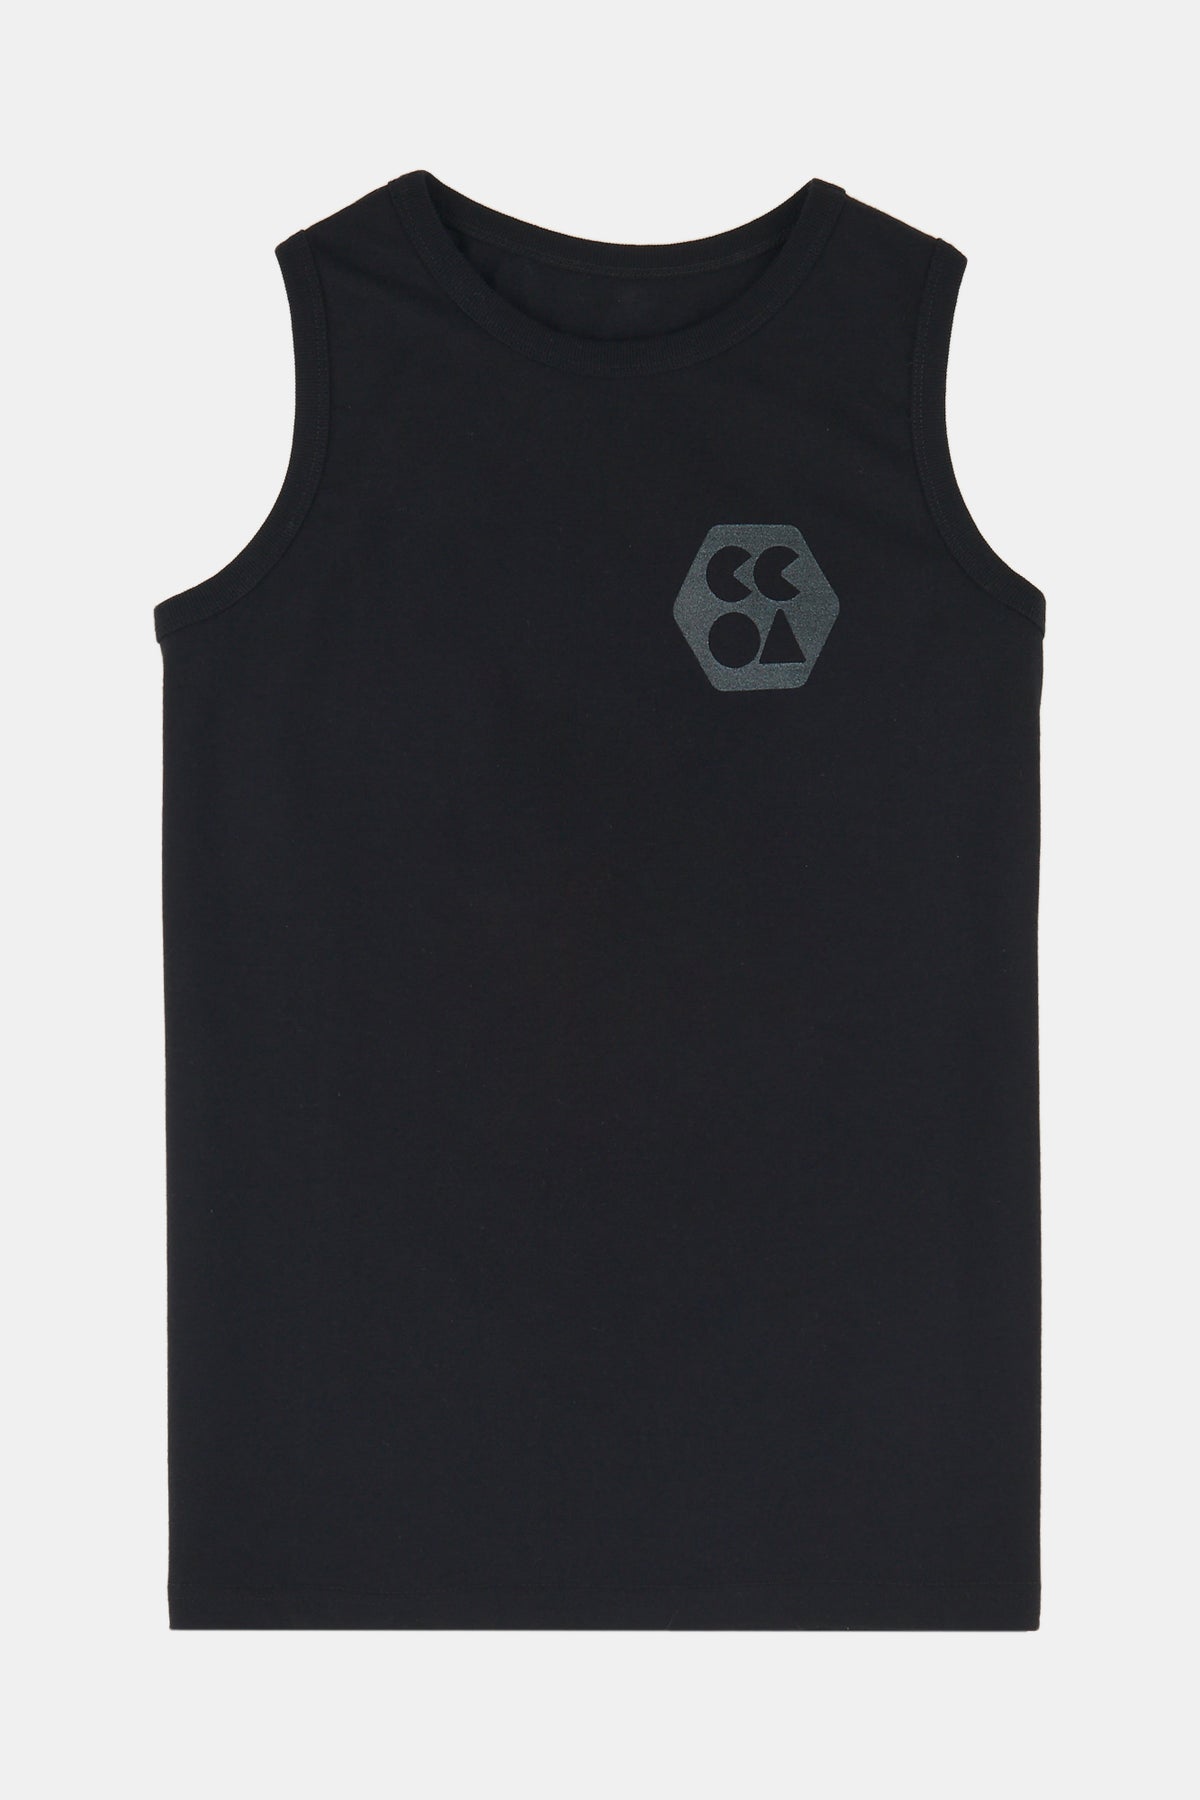 
            Flatlay product shot of men&#39;s sleeveless t shirt plastic free black with charcoal CCOA logo